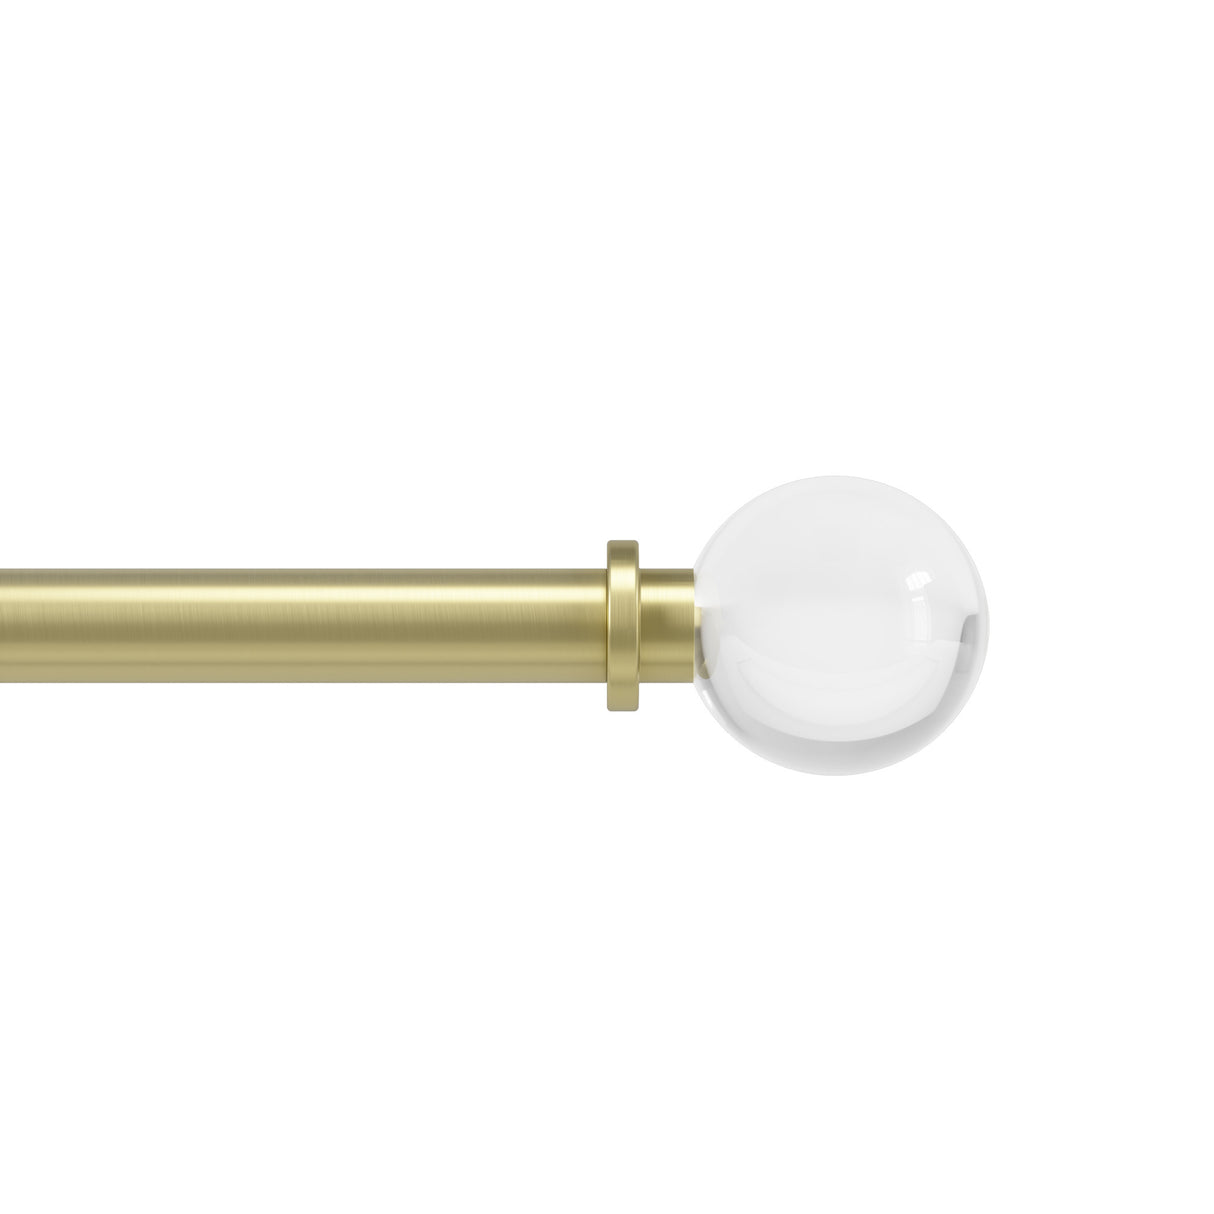 Single Curtain Rods | color: Brass | size: 36-72" (91-183 cm) | diameter: 1" (2.5 cm)